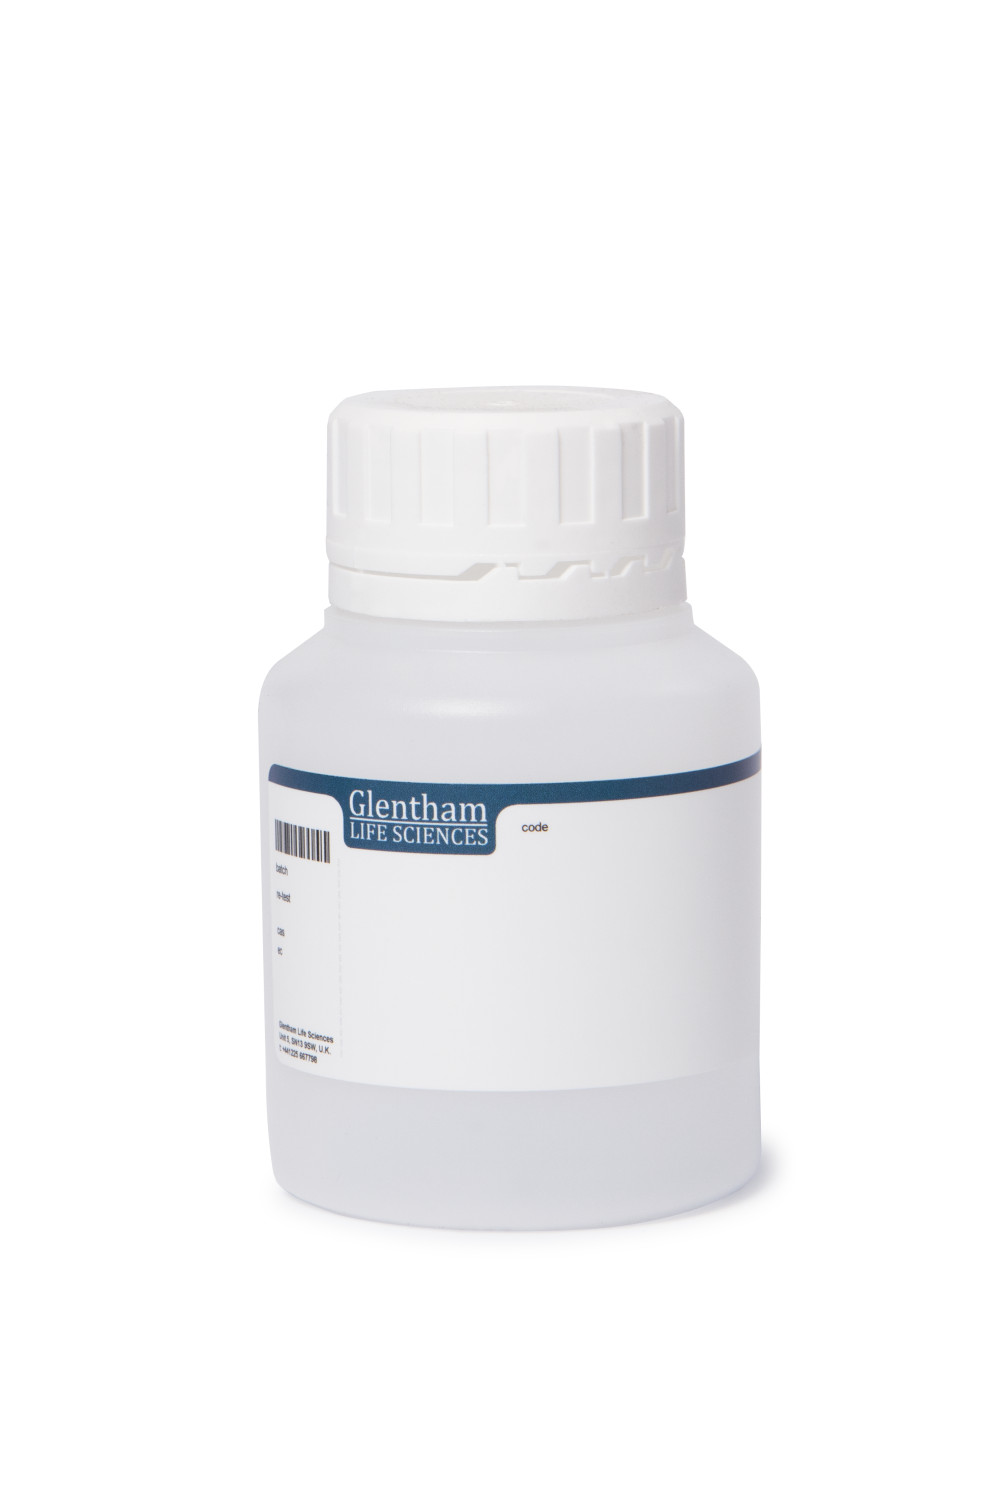 Sodium Lauryl Sulfate, 20 Percent (w/v) Solution: 20% (w/v) Concentration,  Plastic, Bottle, Lab